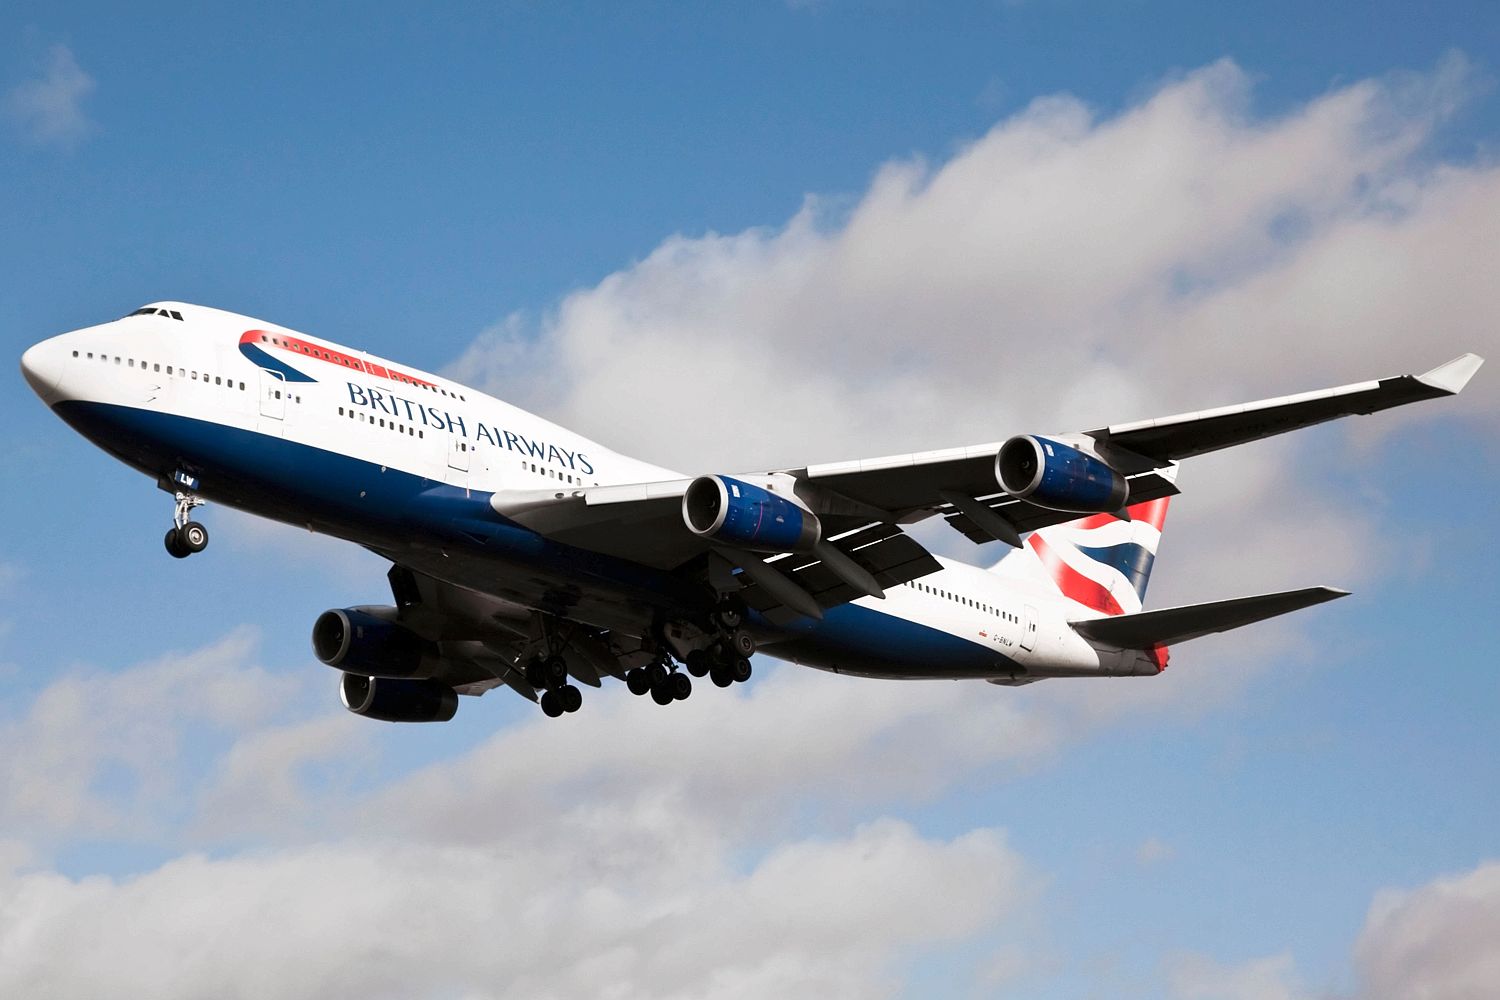 A Passenger of British Airways injured seriously inside airplane